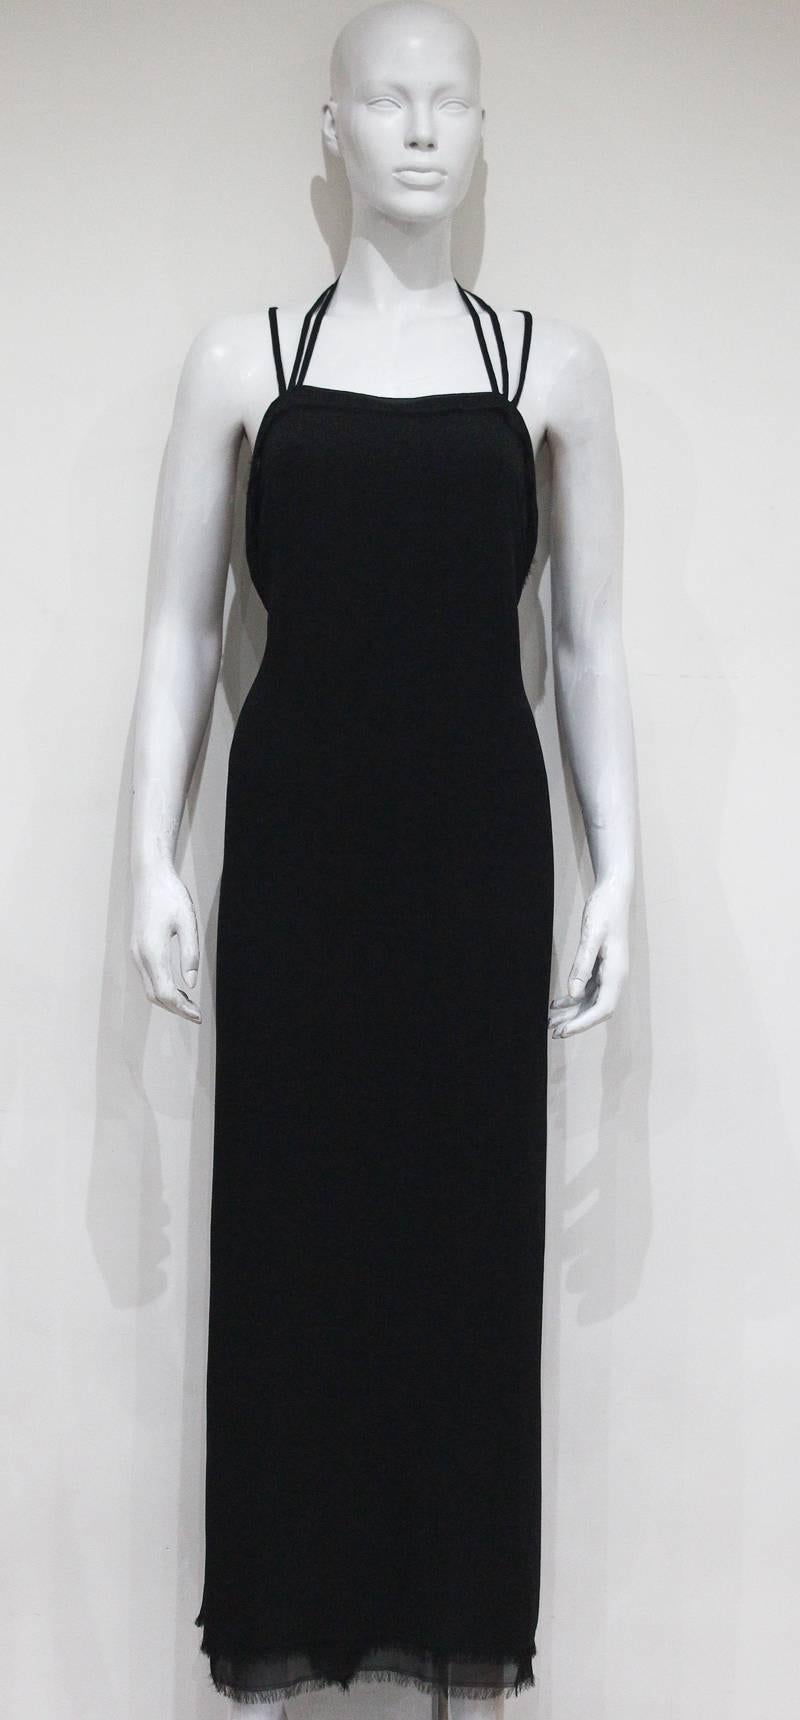 Women's Yves Saint Laurent by Tom Ford silk chiffon black evening dress, c. 2001